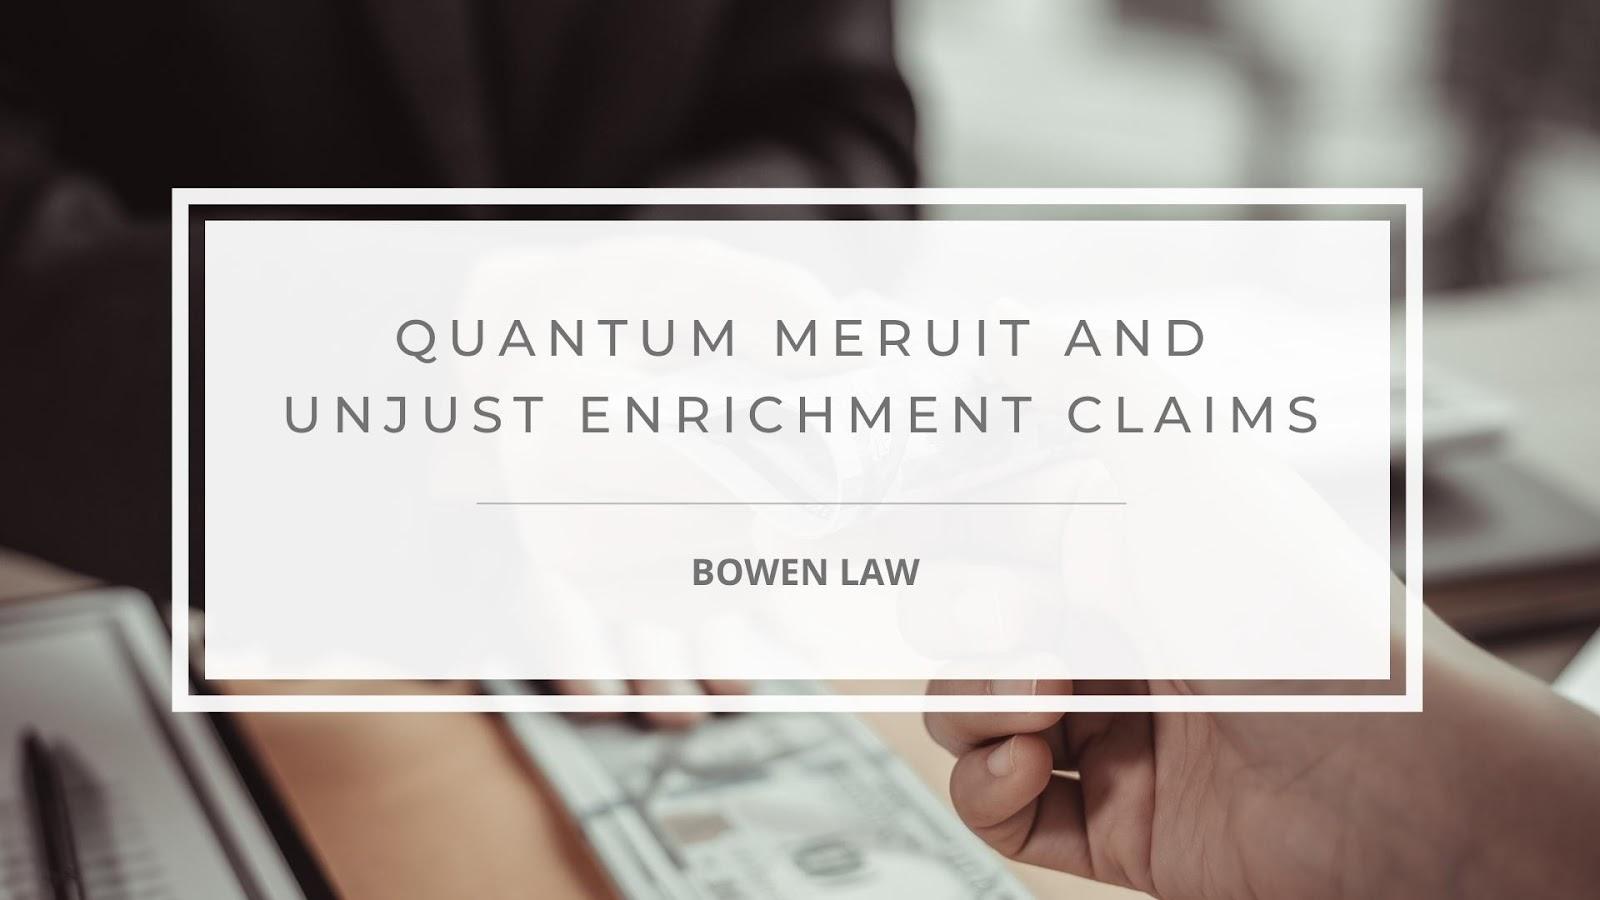 Featured image of quantum meruit and unjust enrichment claims